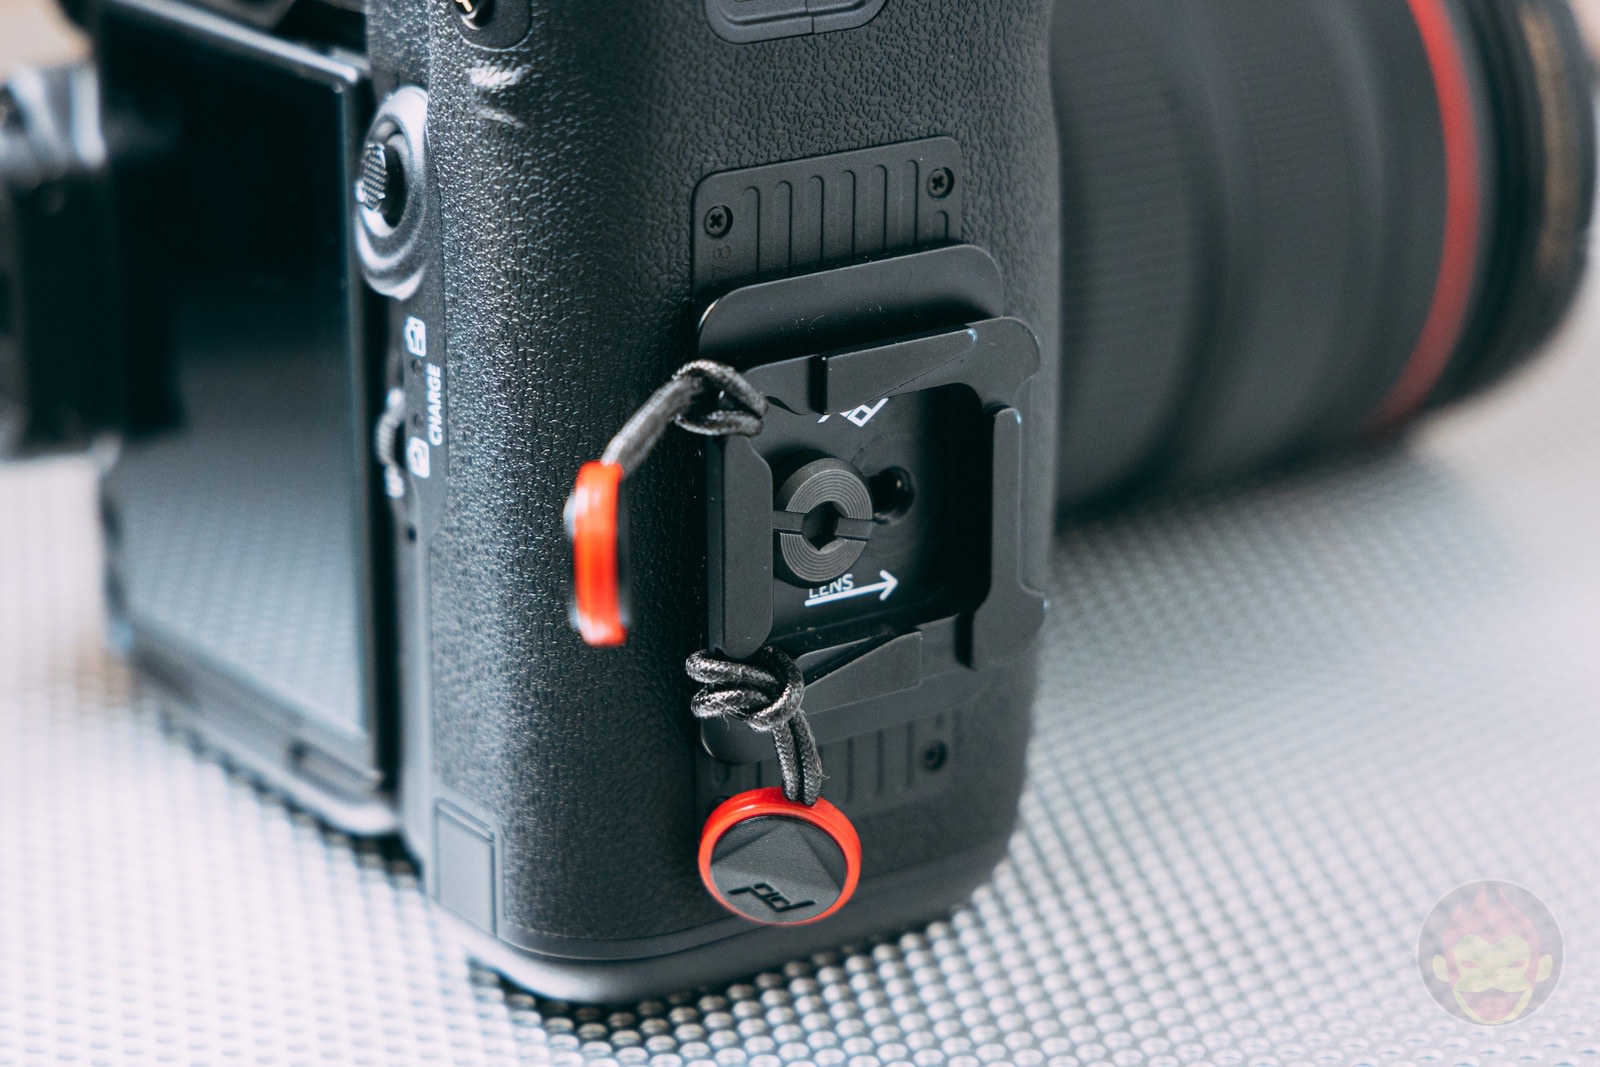 Canon R5 R6 Battery Grip BG R10 Review 08